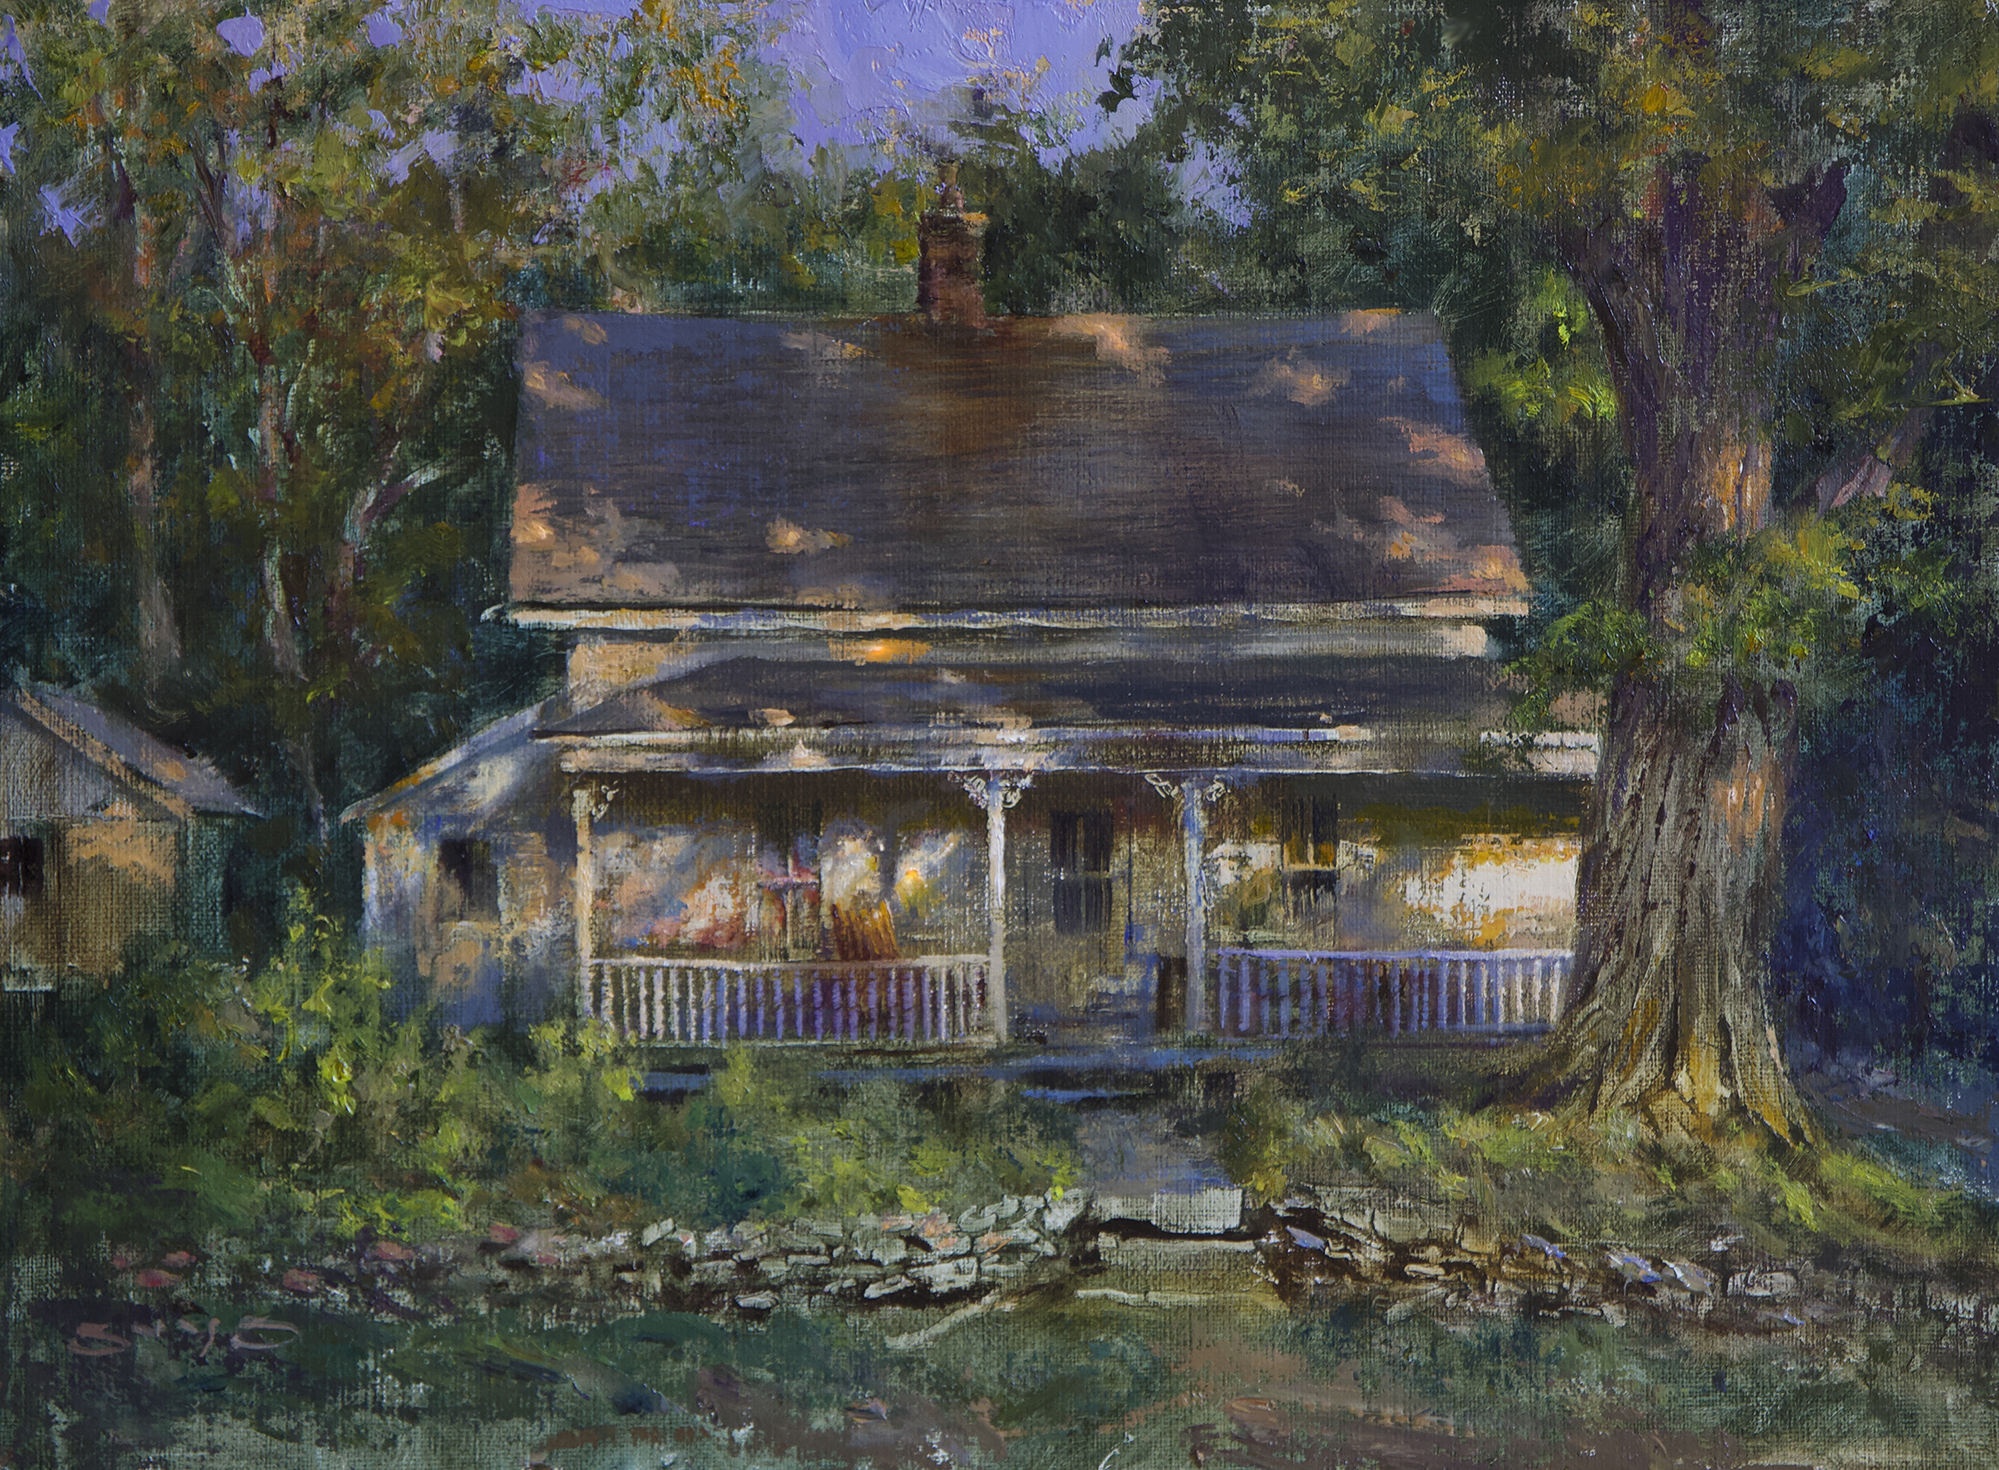 Plein air painting of a home